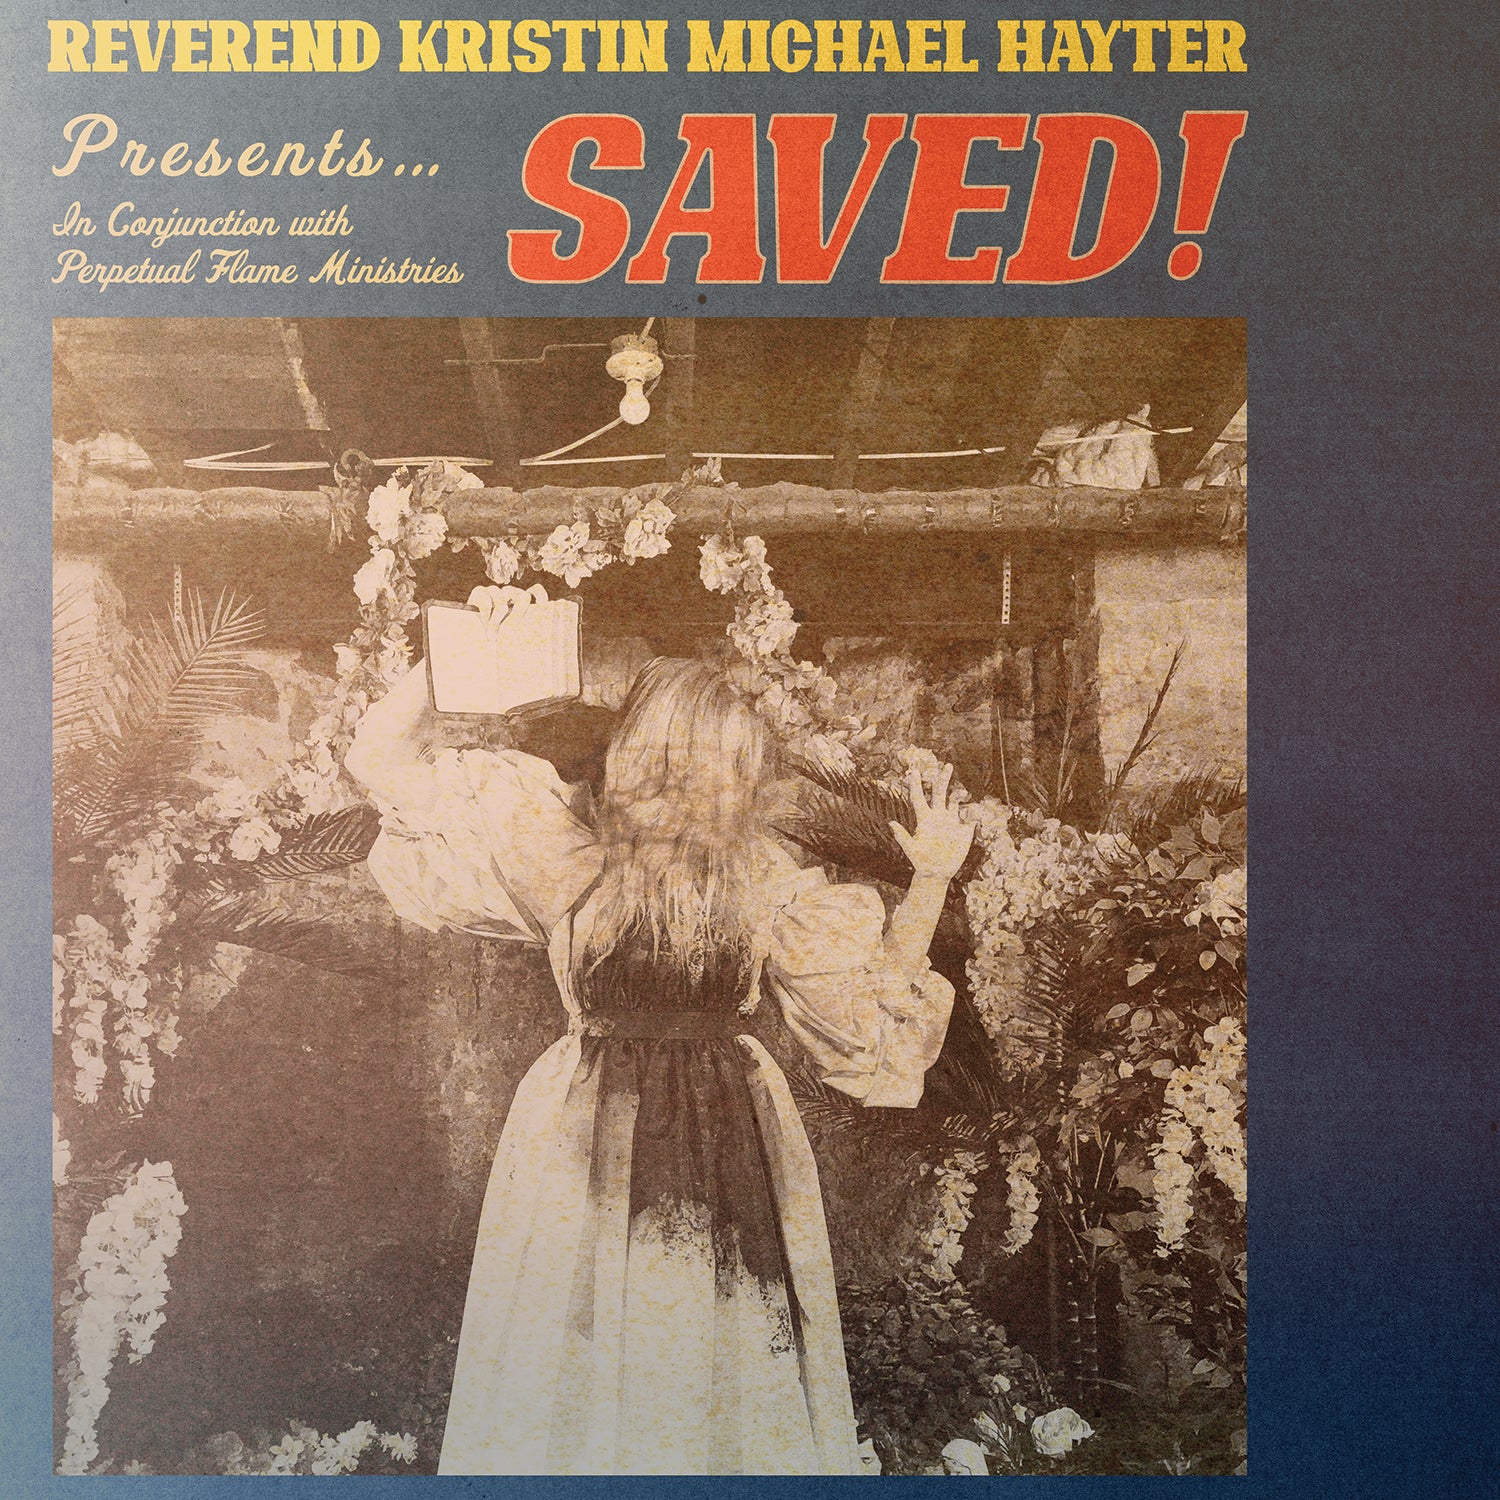 REVEREND KRISTIN MICHAEL HAYTER "Saved!" LP